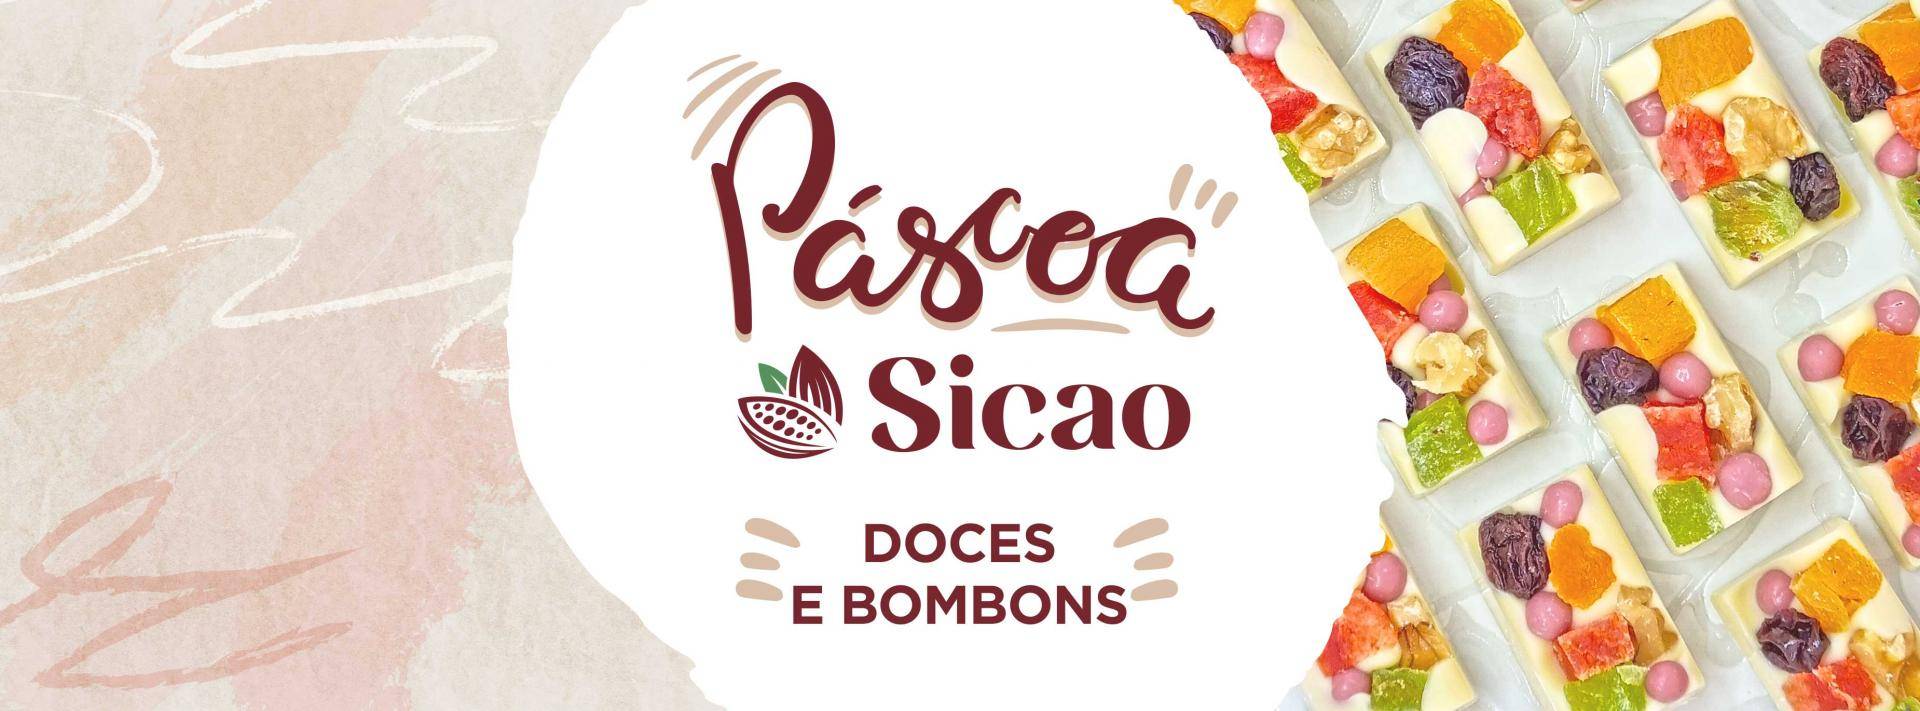 Páscoa SICAO - Doces e Bombons